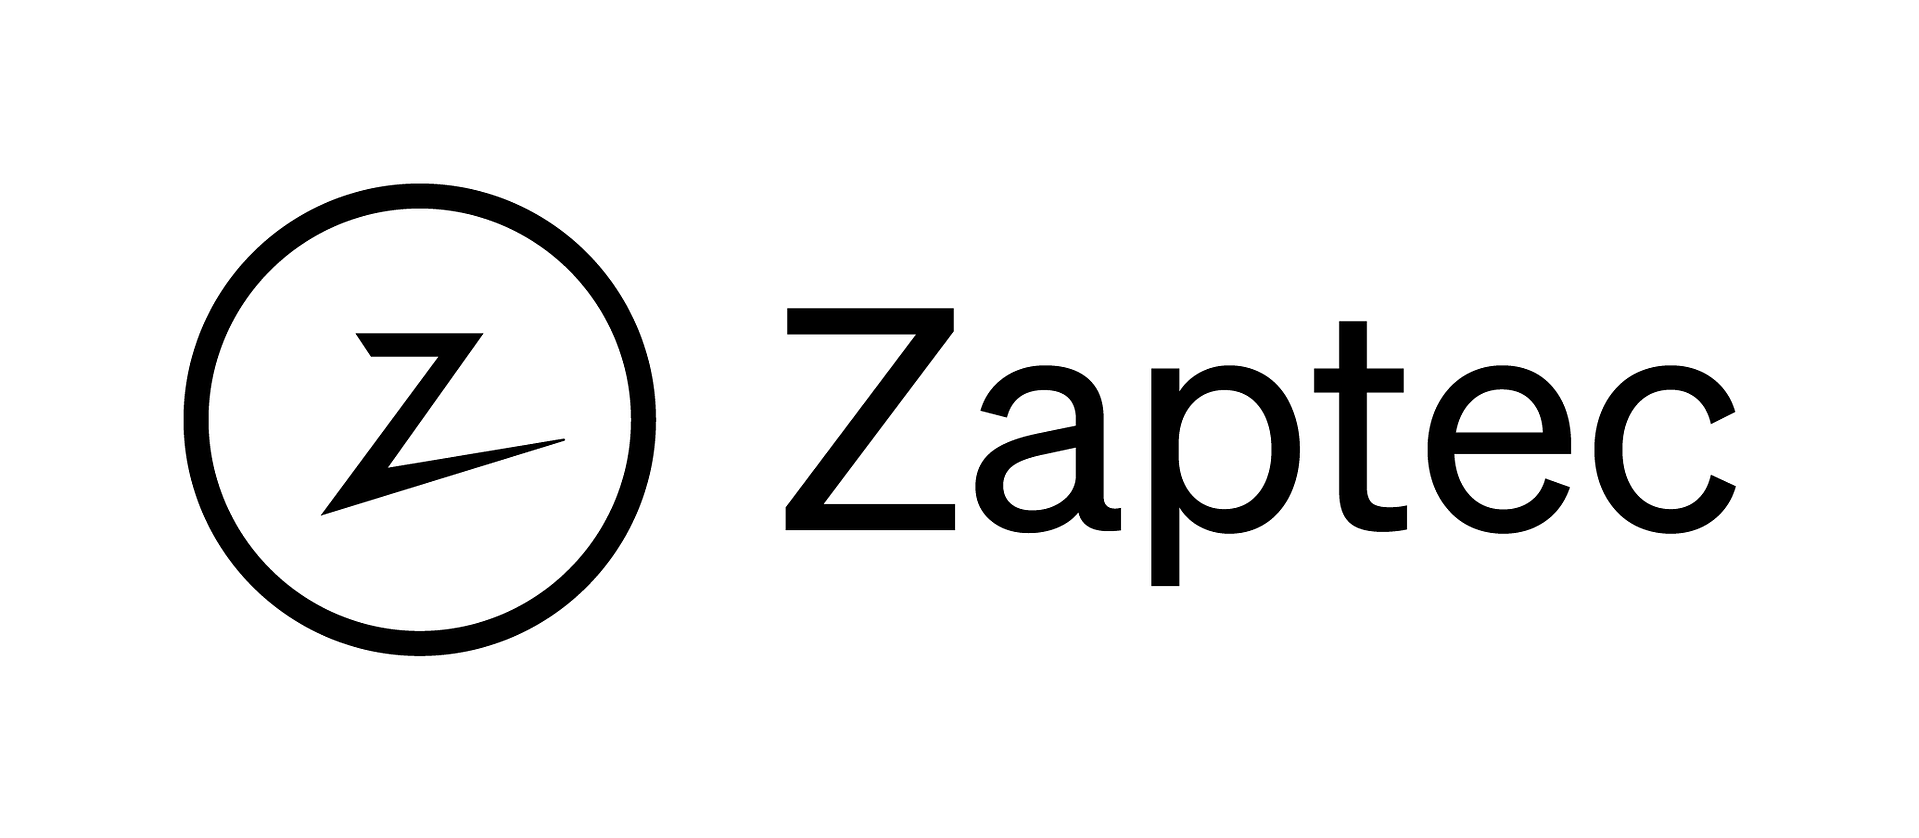 Zaptec logo Black